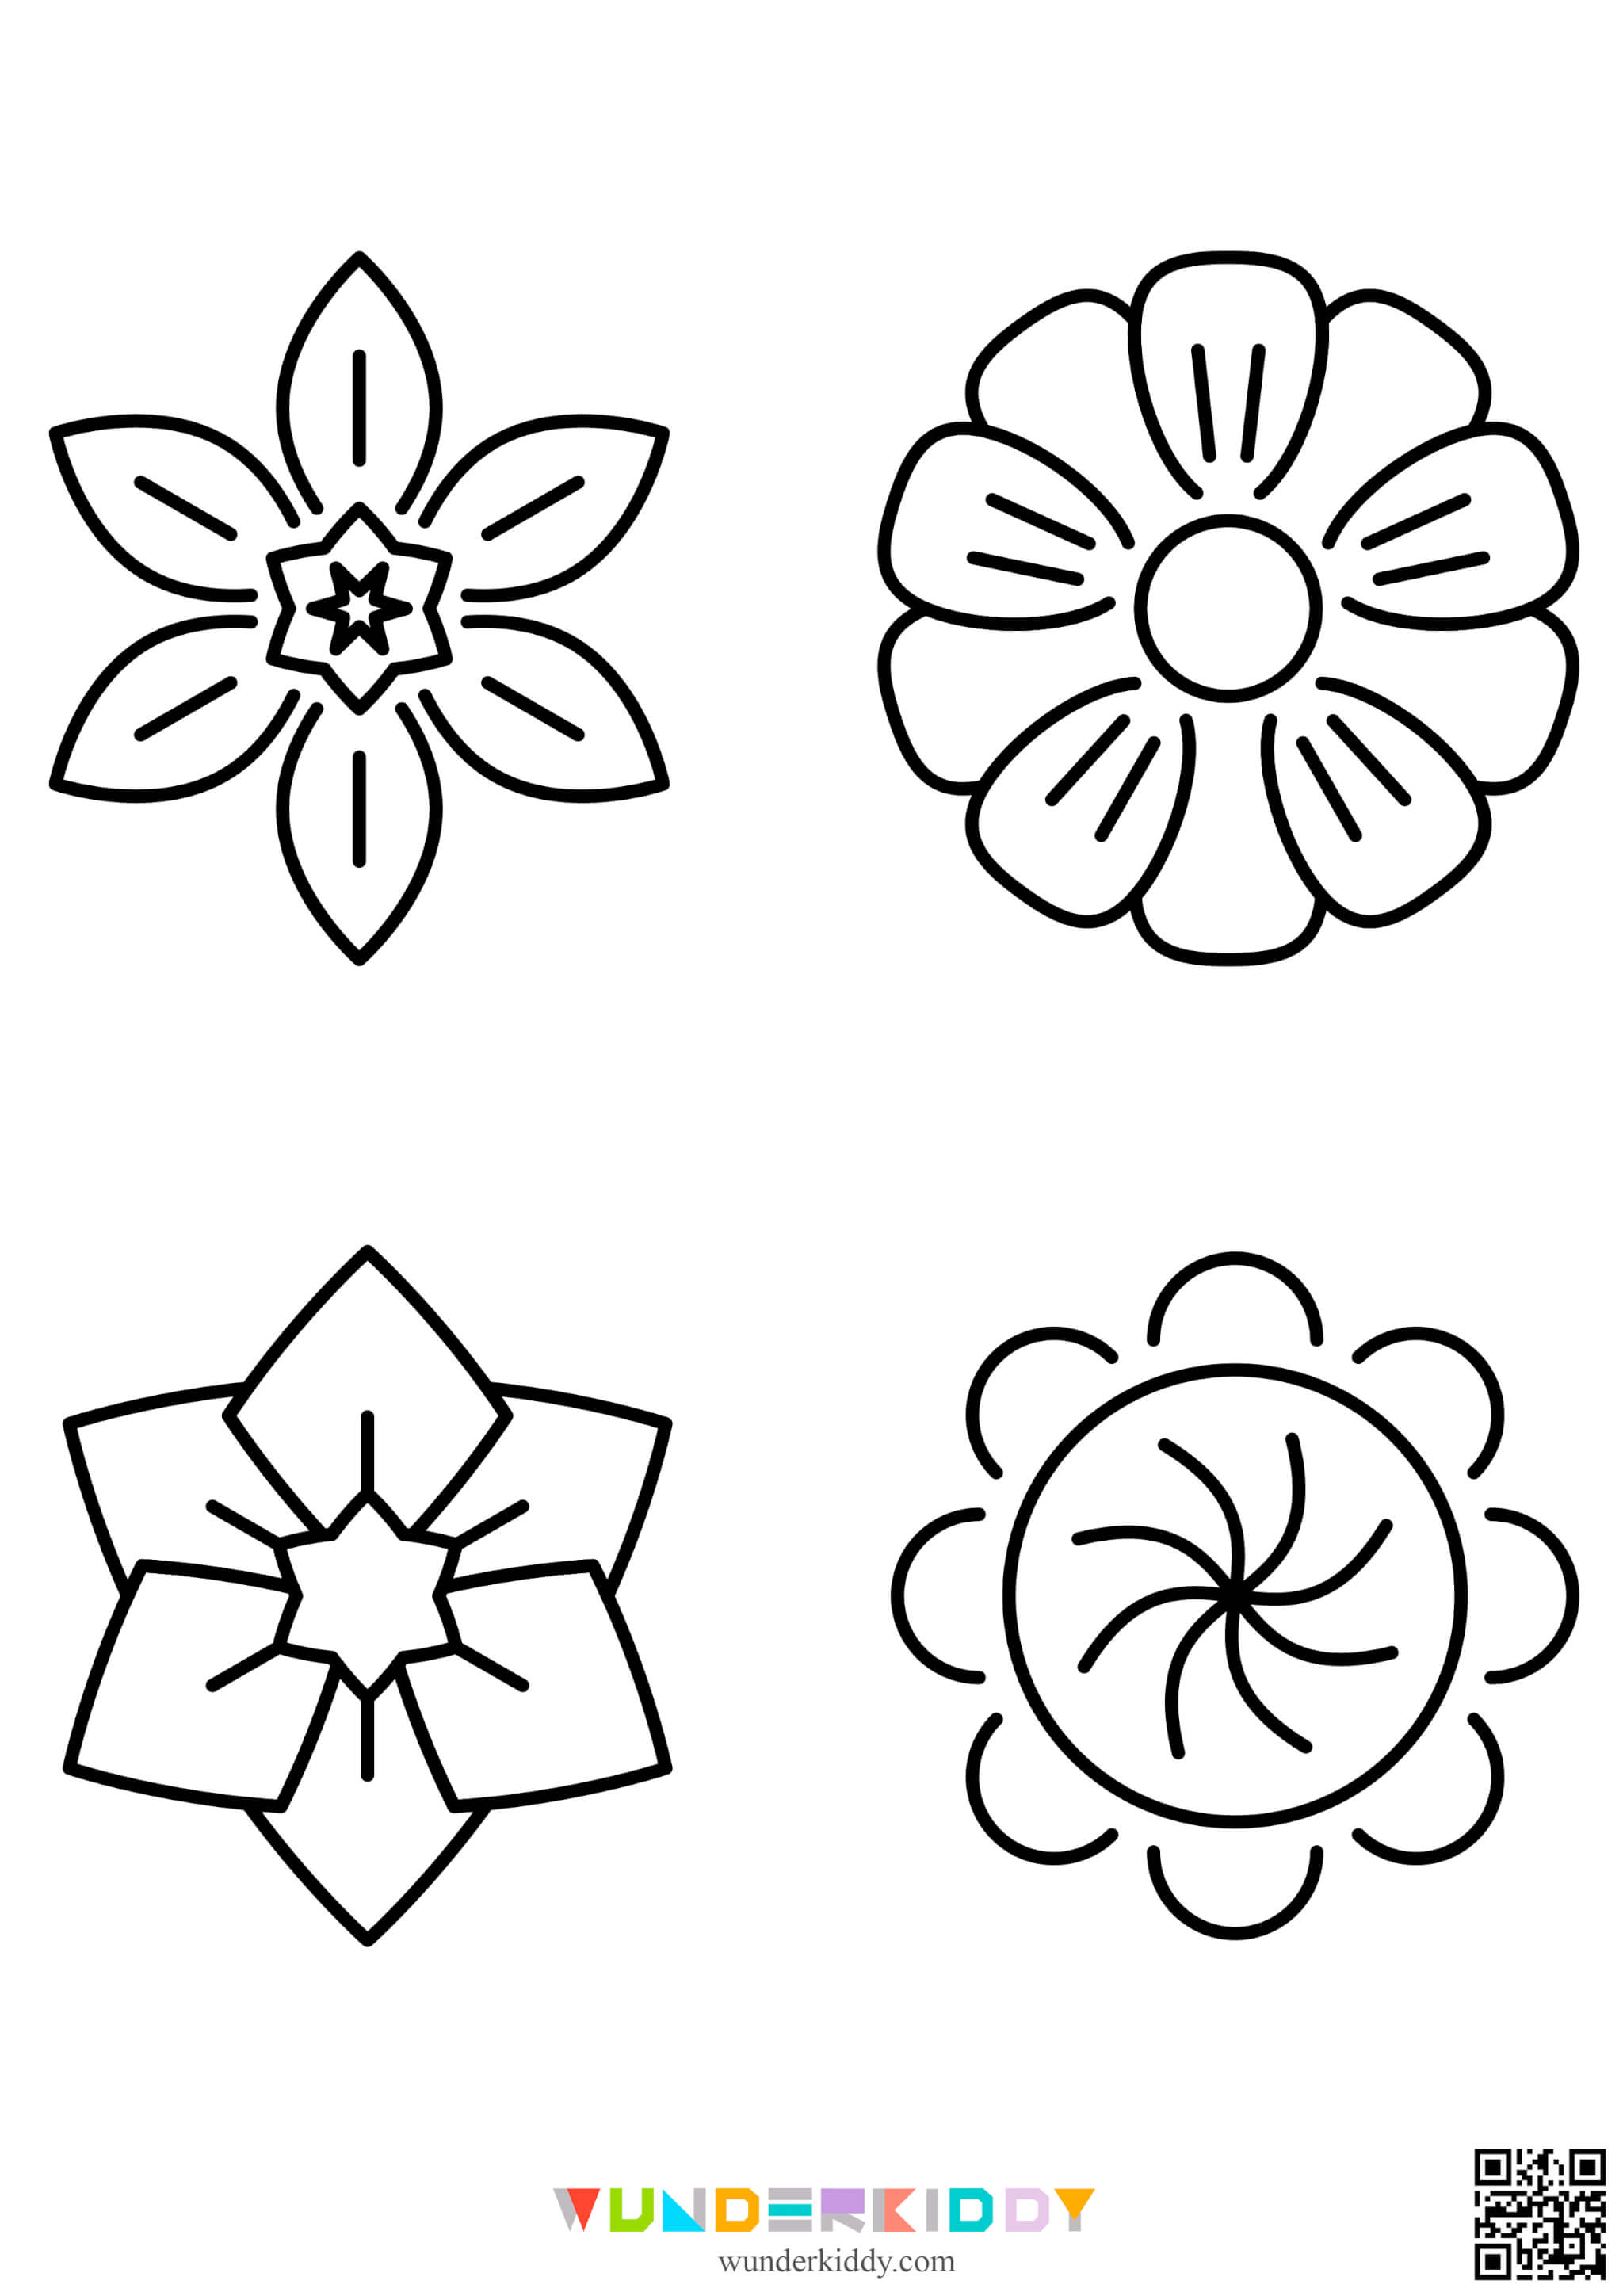 Simple Flower Templates - Image 5